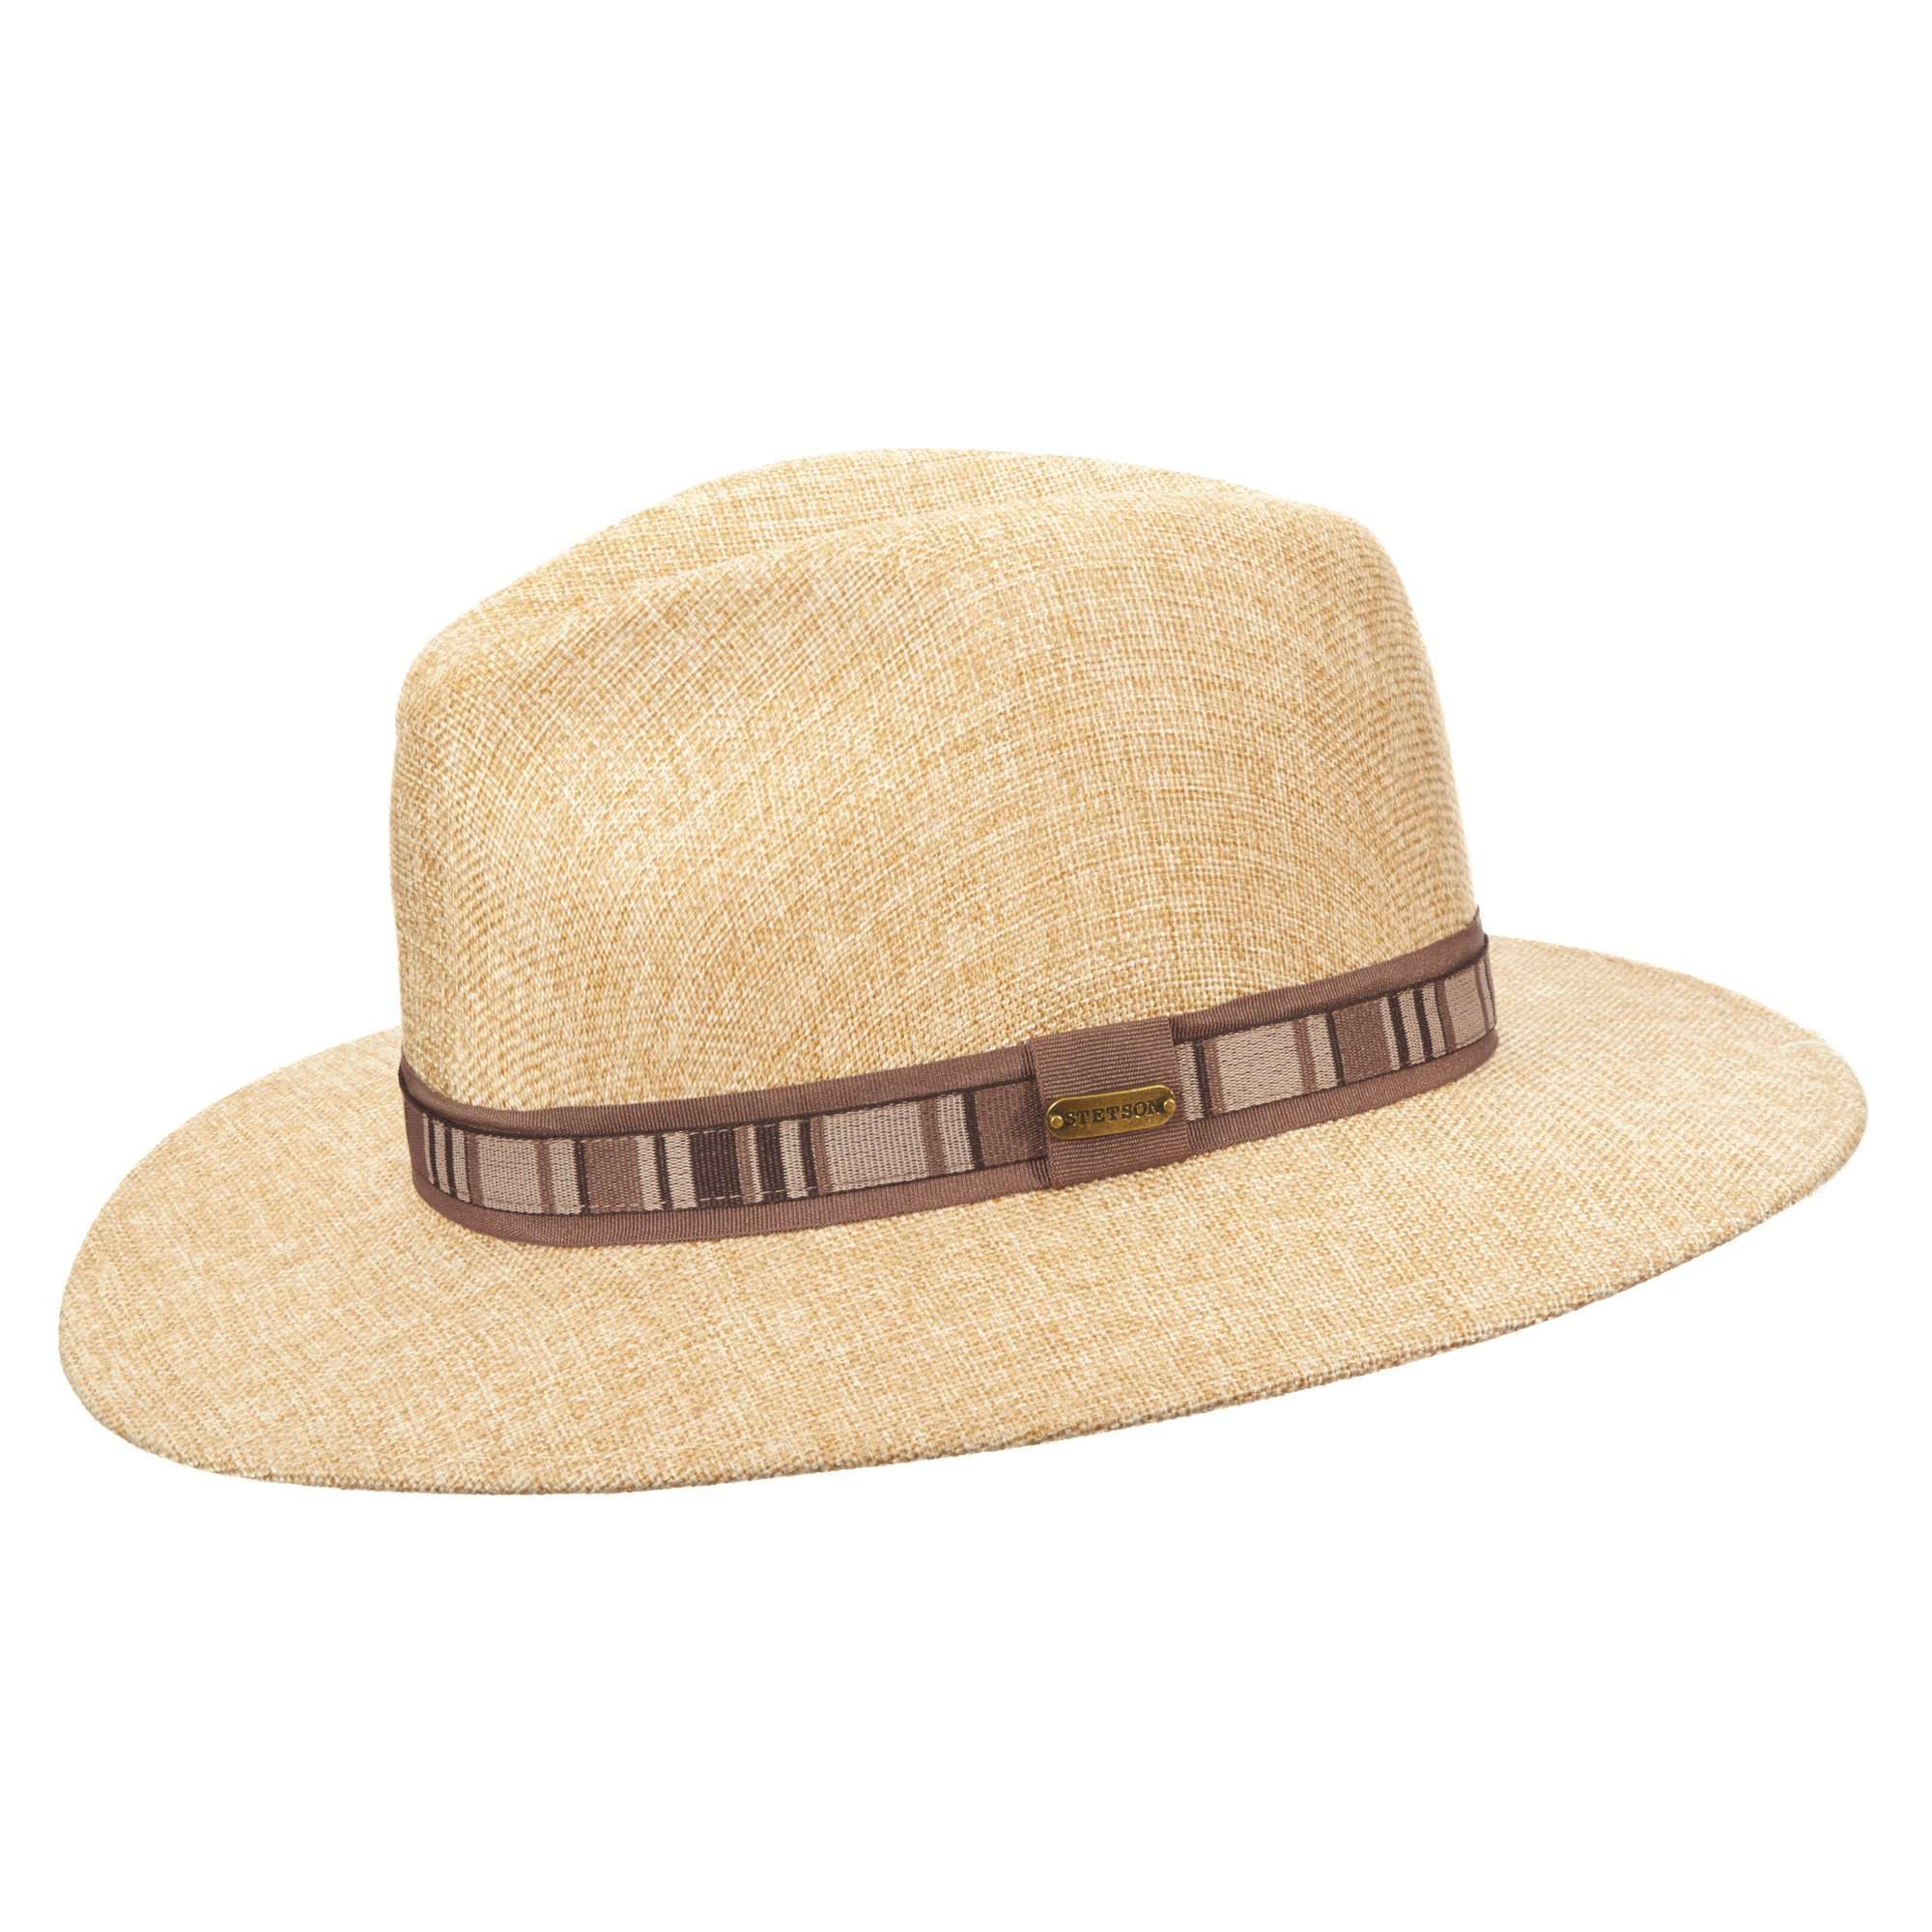 Stetson Hats Matte Toyo Safari Safari Hat Stetson Hats    